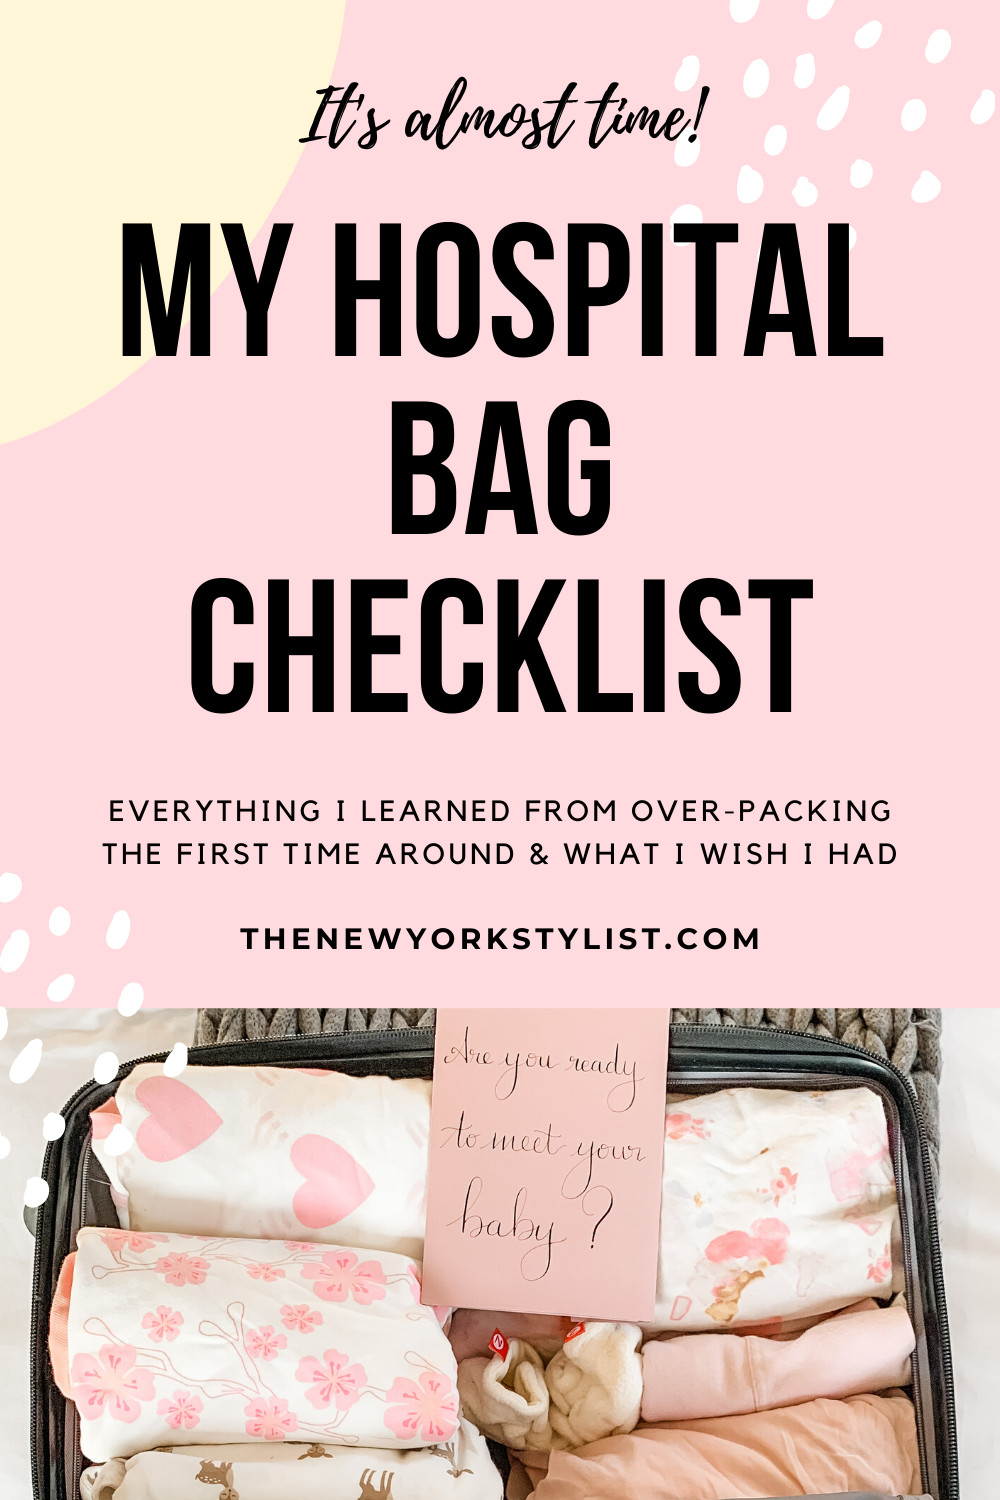 https://thenewyorkstylist.com/wp-content/uploads/2020/03/TheNewYorkStylist-hospital-bag-checklist-graphic.png